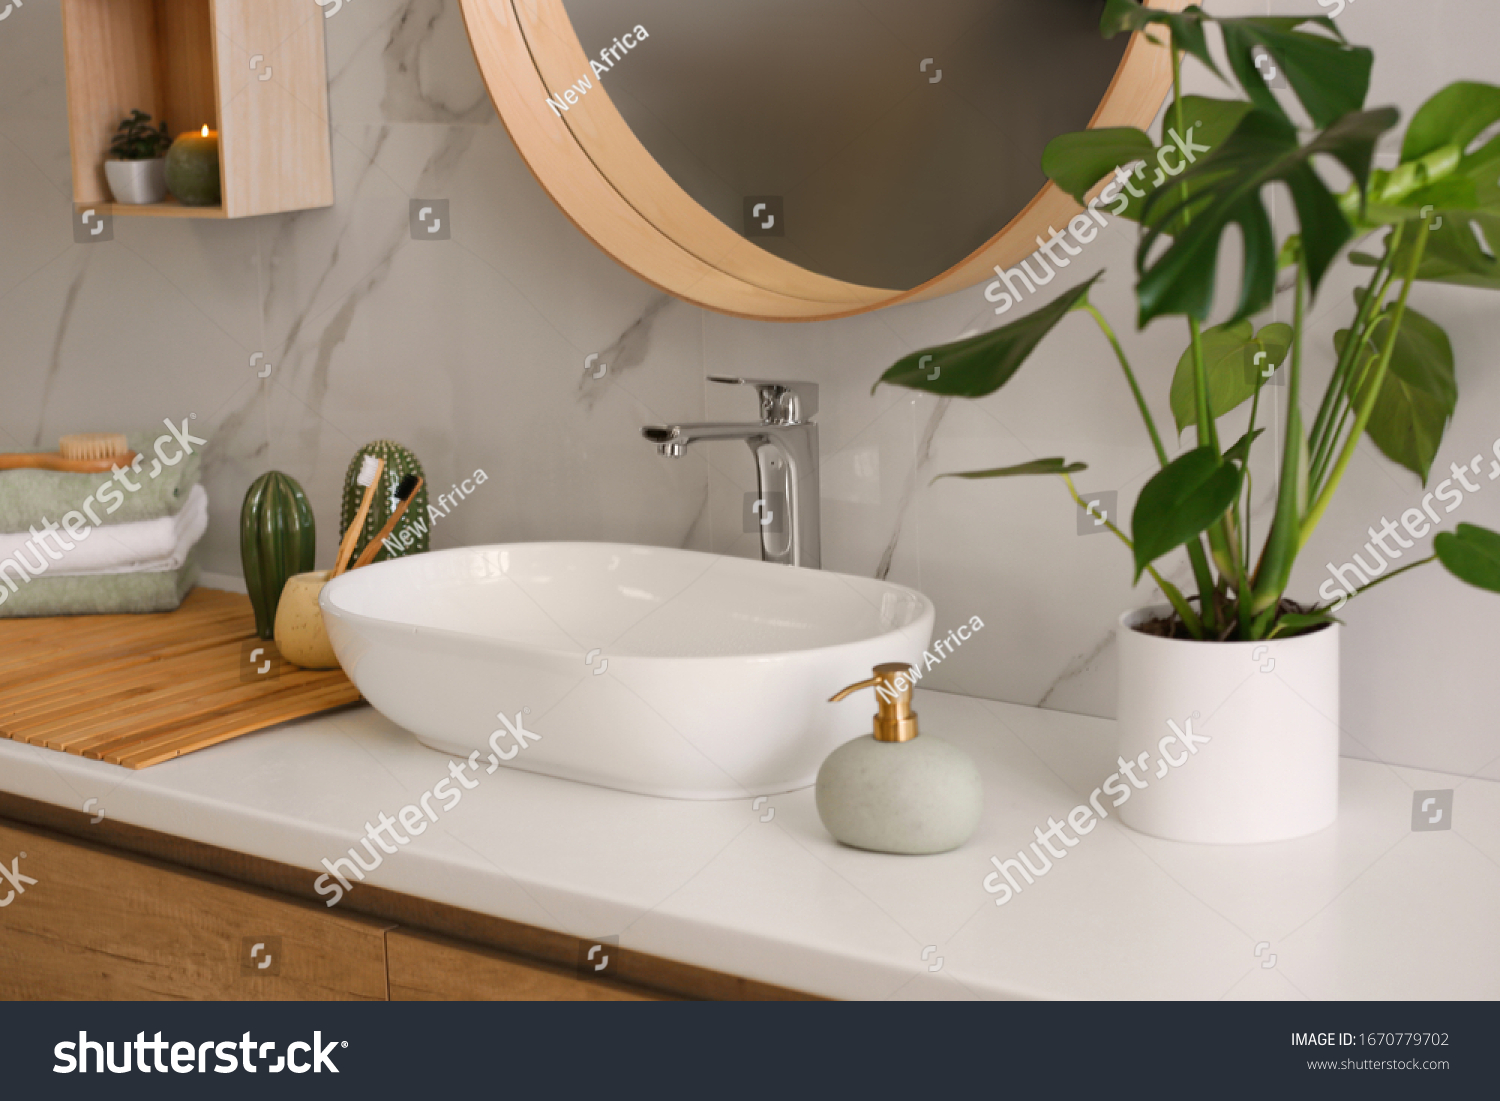 Stylish vessel sink on light countertop in modern bathroom #1670779702